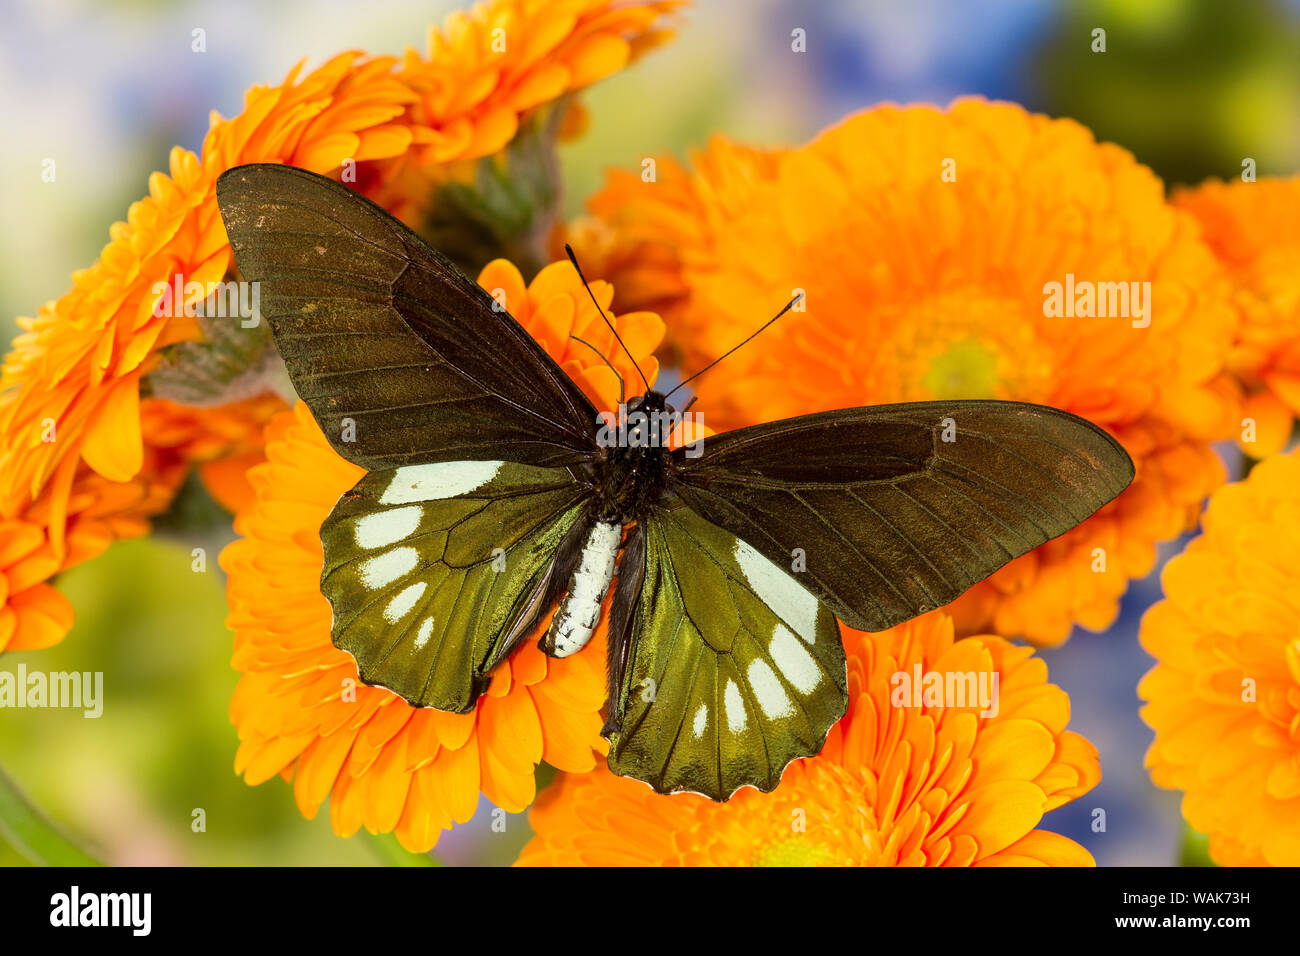 Tropical butterfly, Battus madyes, on orange gerber daisy Stock Photo